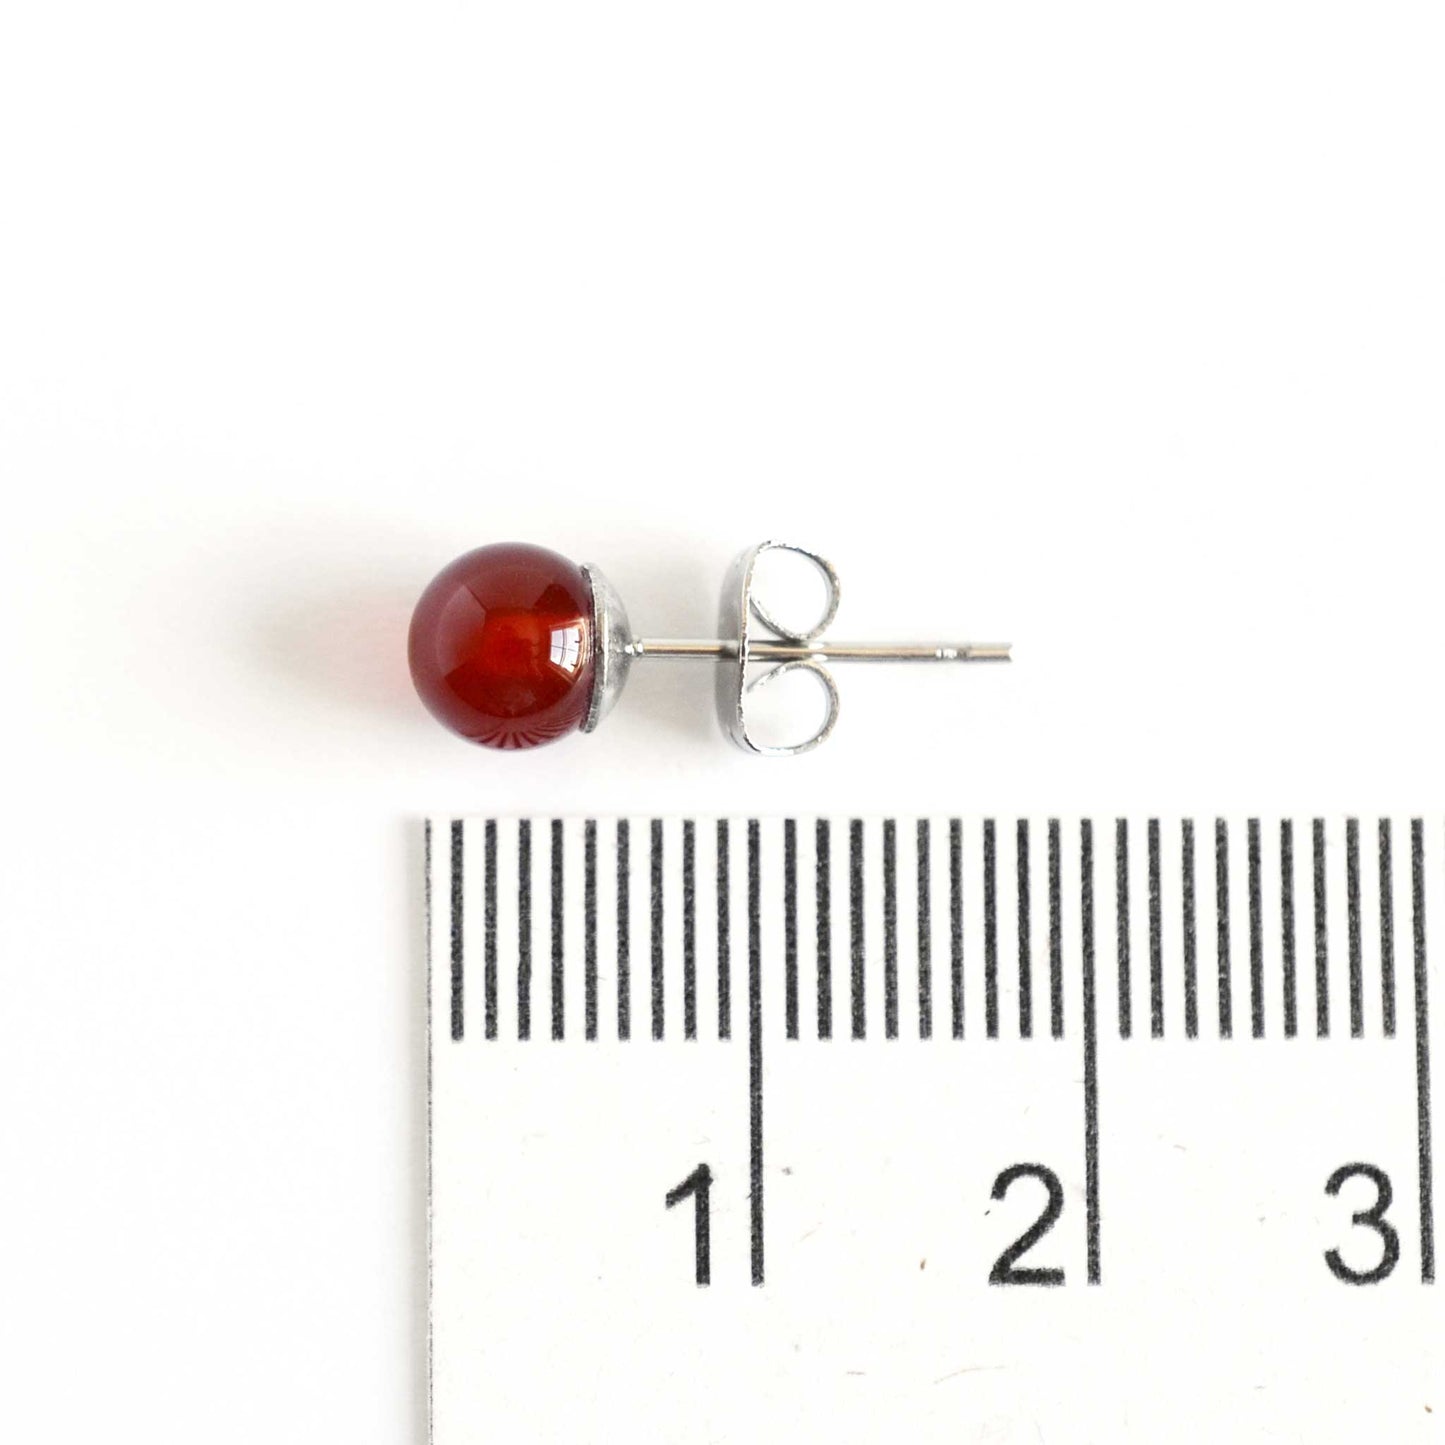 6mm Carnelian gemstone ball stud earring next to ruler